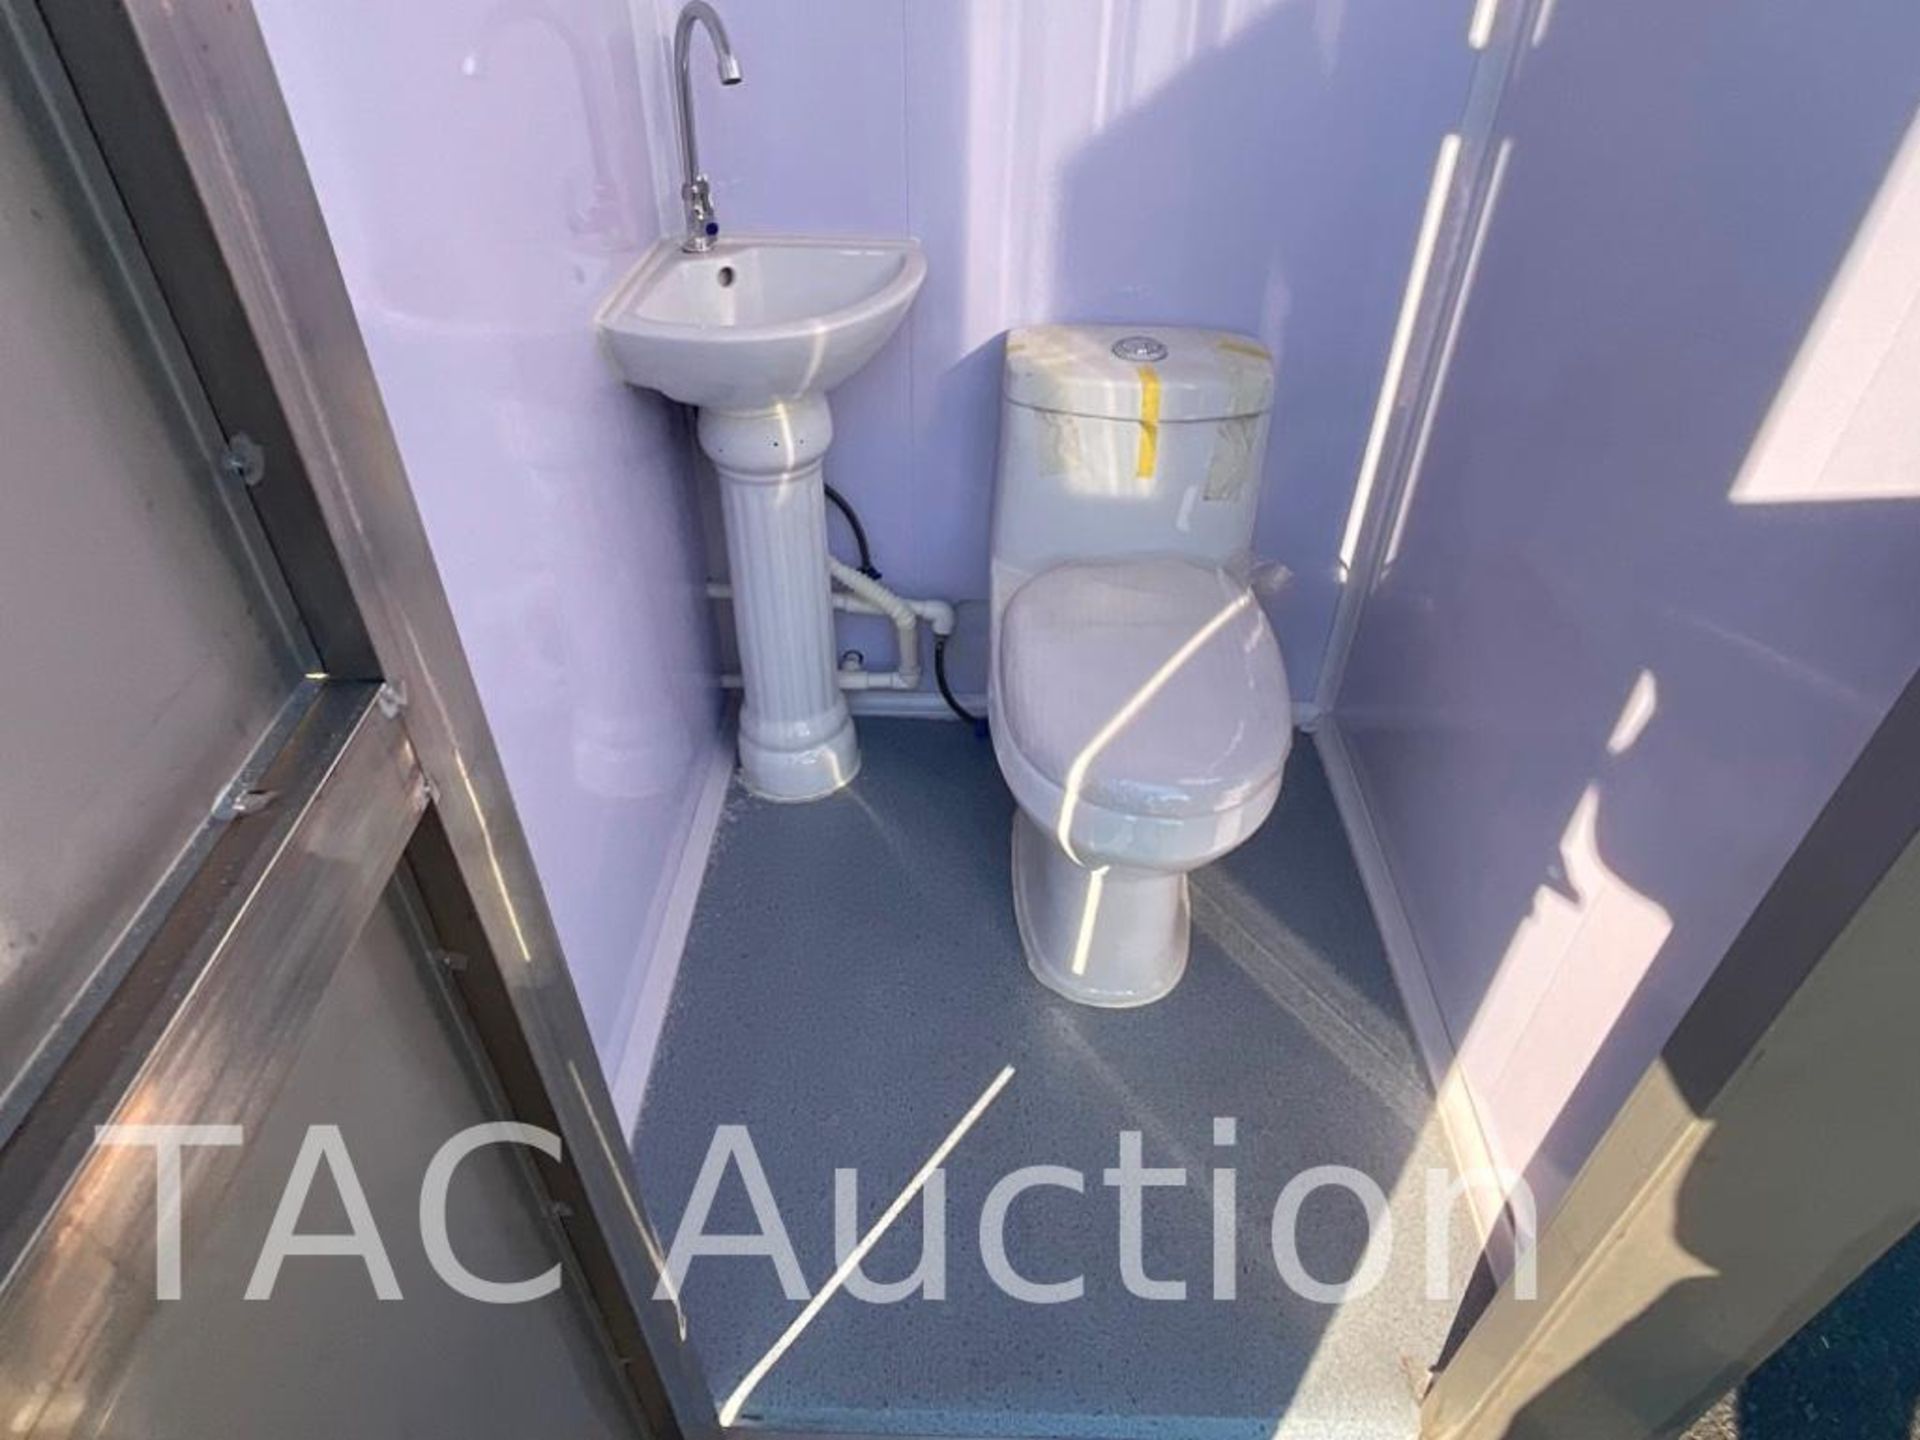 New Double Stall Unisex Porta Potty W/ Sink - Image 11 of 13